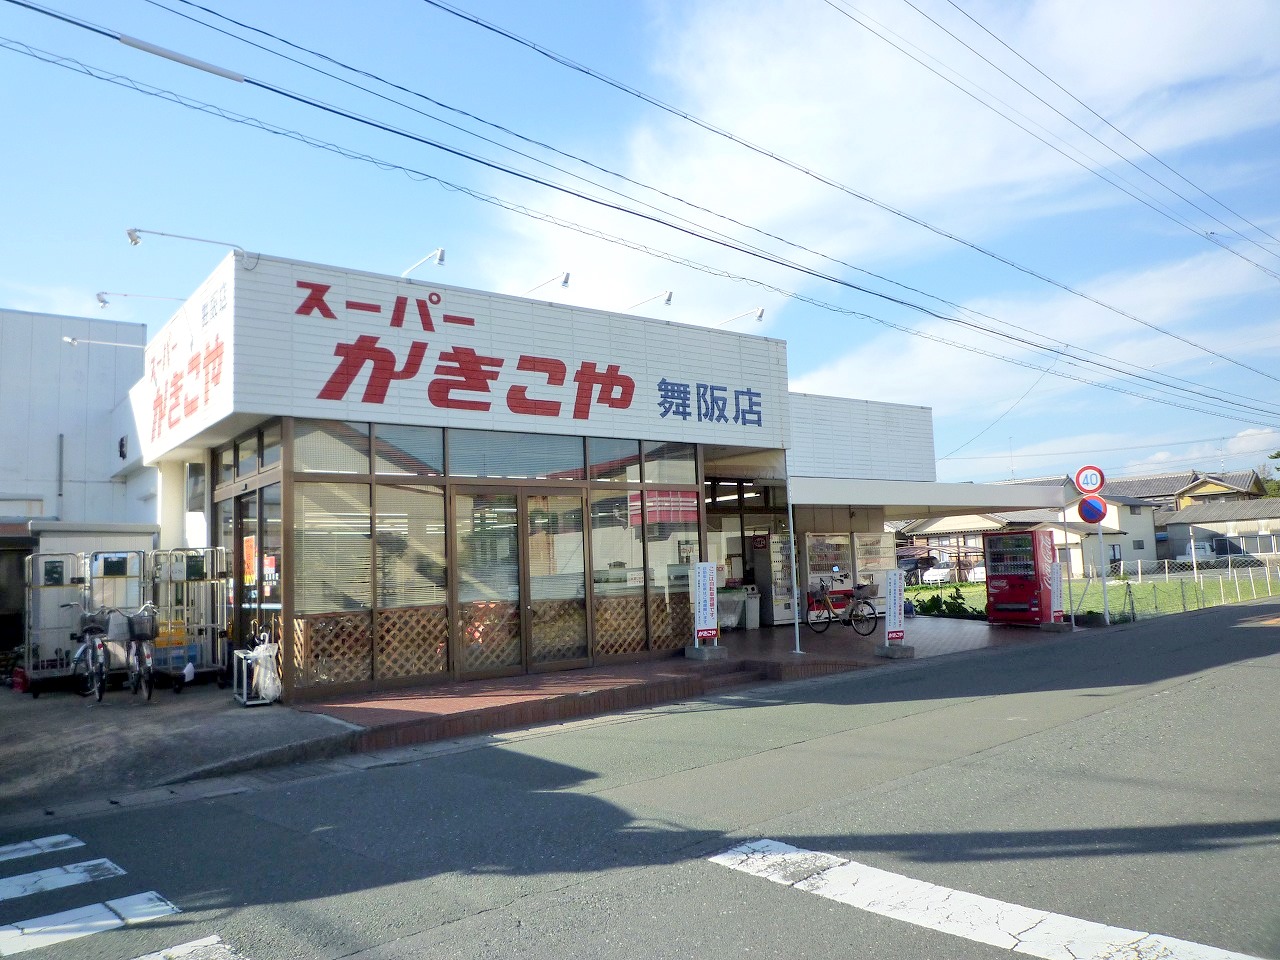 Supermarket. Kakiko and Maisaka store up to (super) 2256m